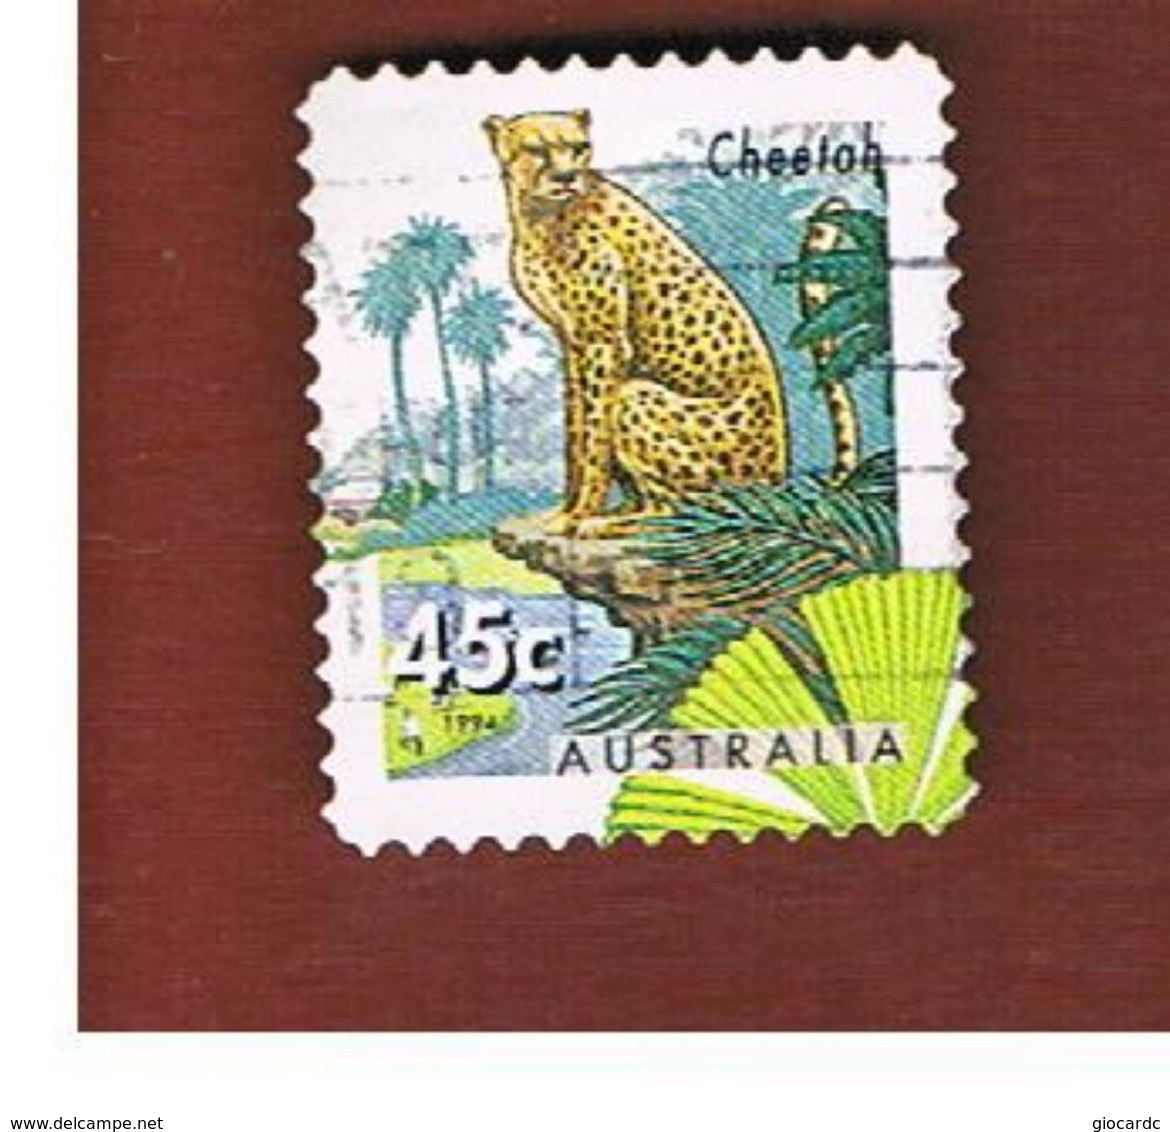 AUSTRALIA  -  SG 1486  -      1994  ANIMALS: CHEETAH   -       USED - Oblitérés